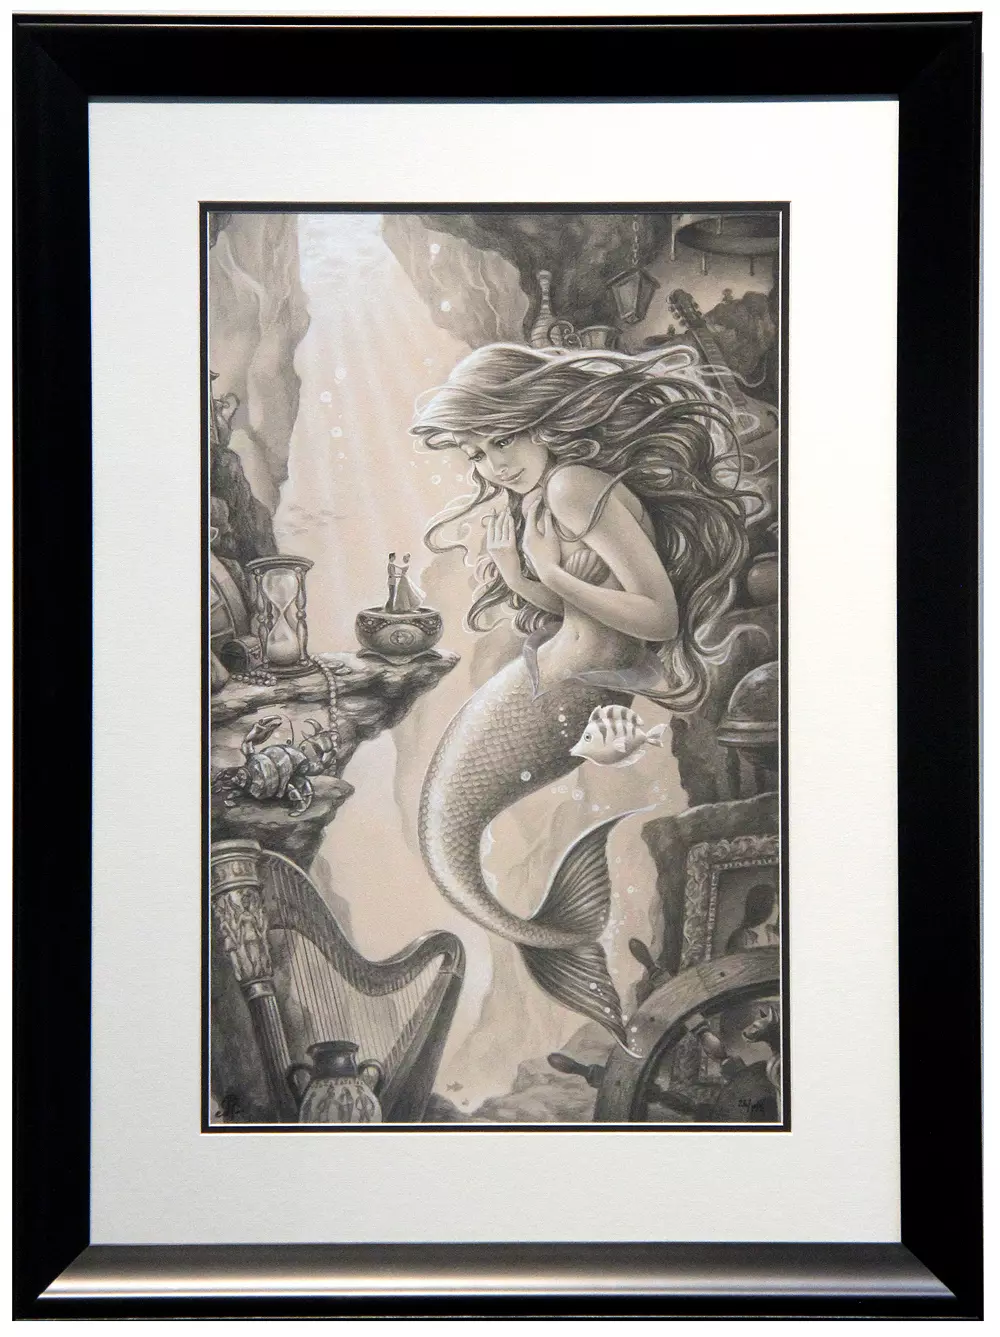 Ariel's Treasured Things - Edson Campos, The Little Mermaid